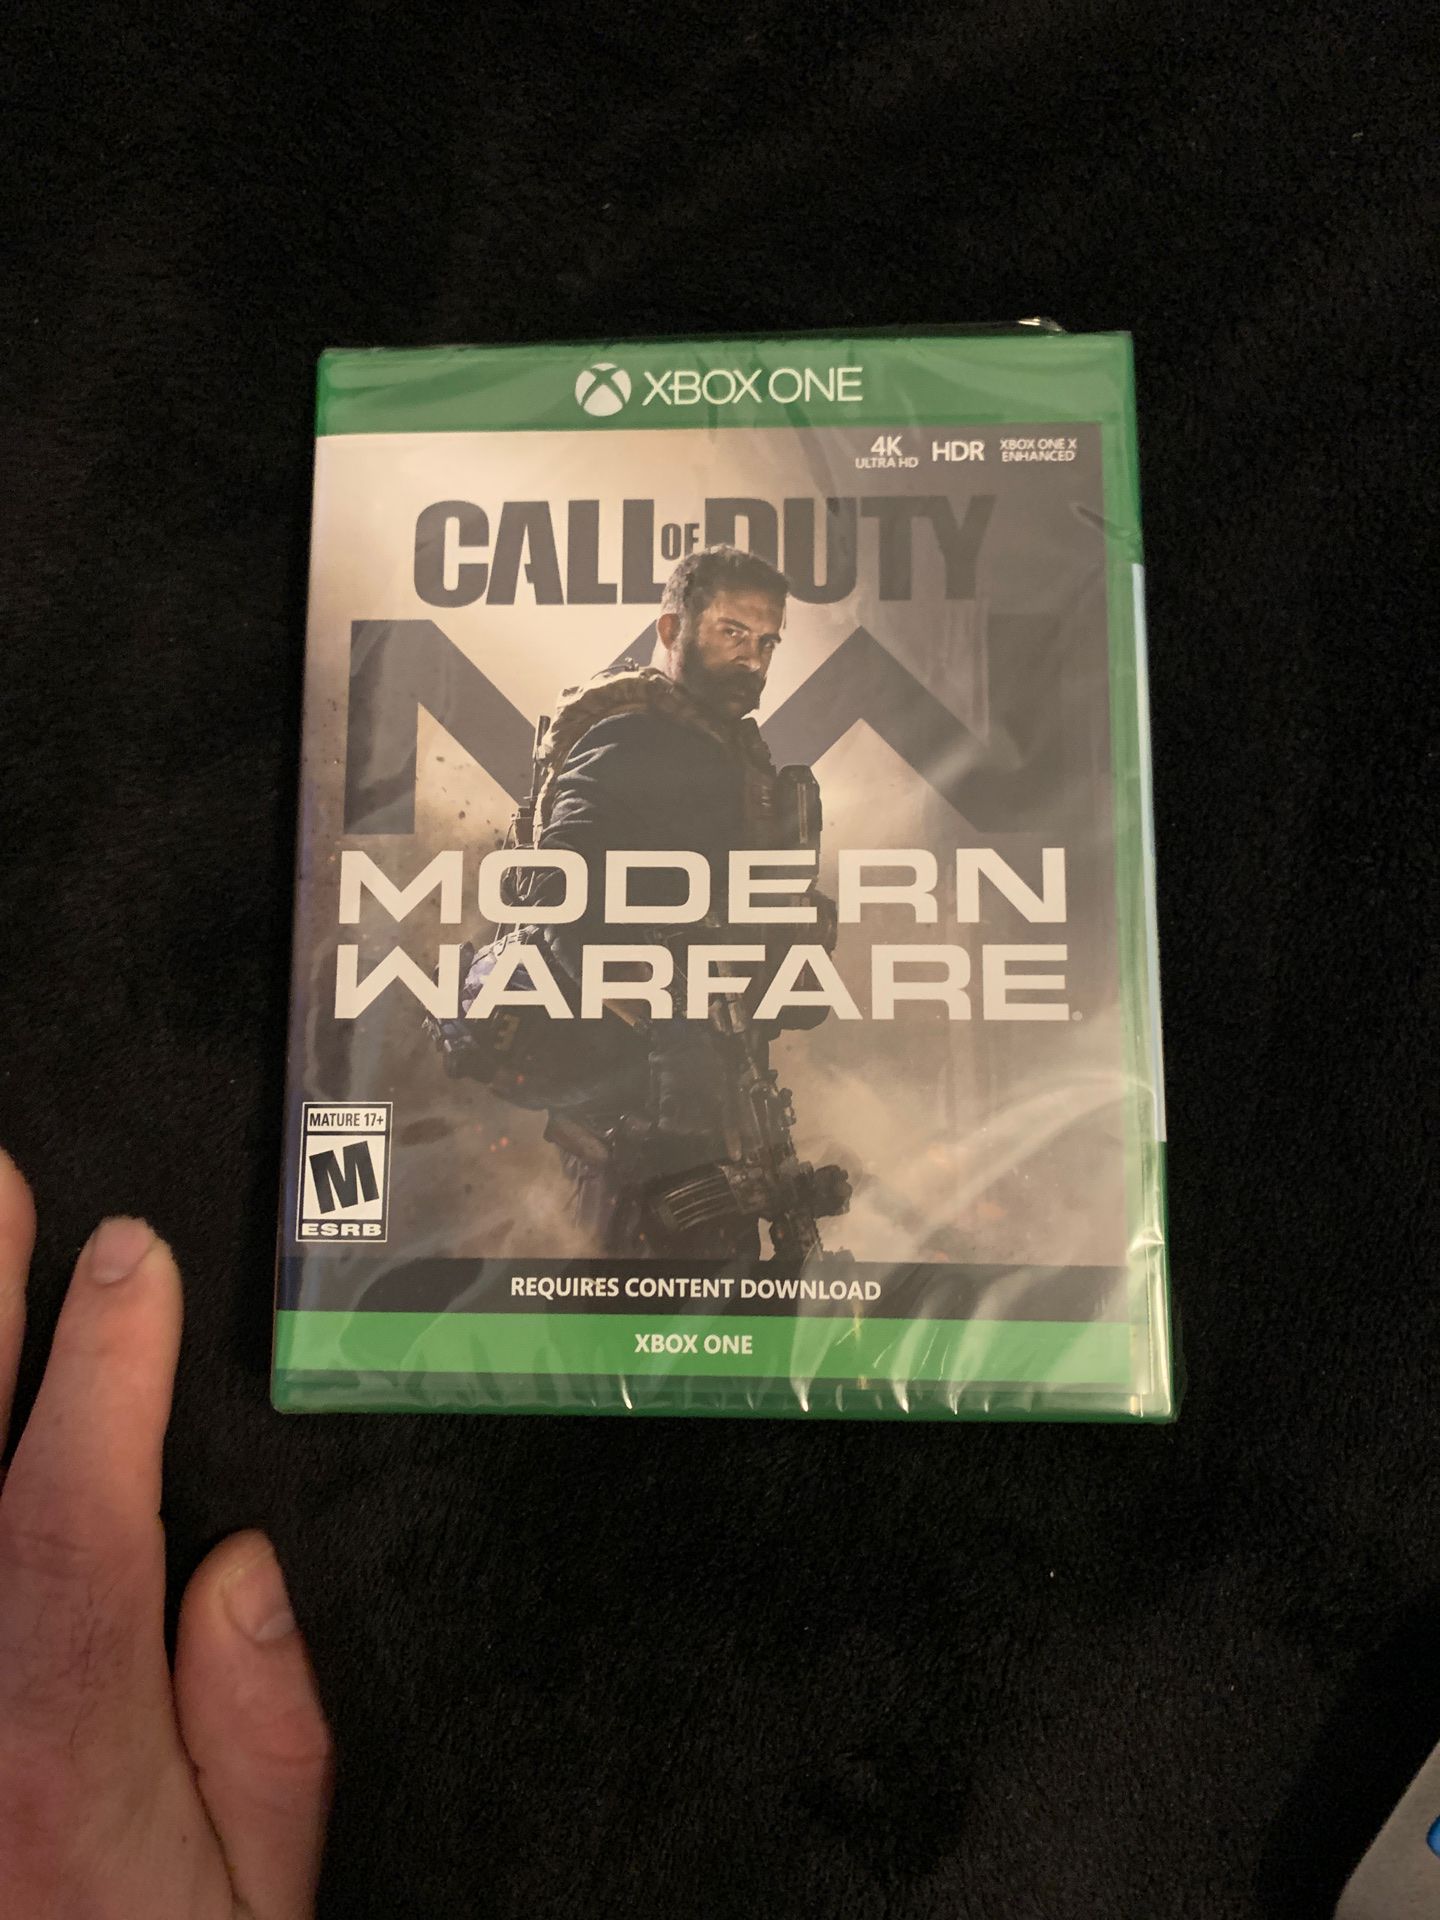 Call of duty modern warfare Xbox one